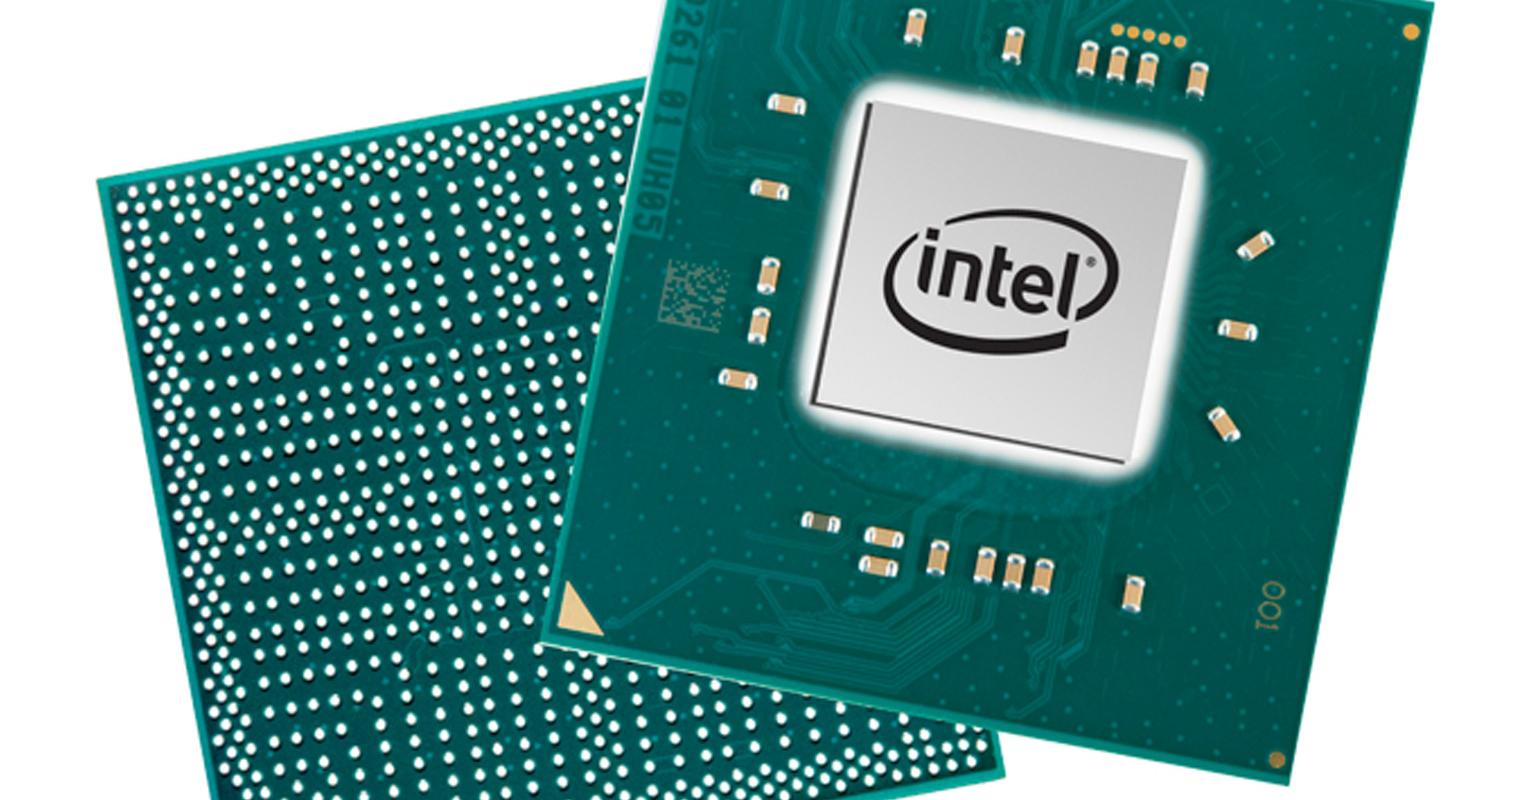 , H Intel θέλει να βάλει τέλος στην κρίση των επεξεργαστών